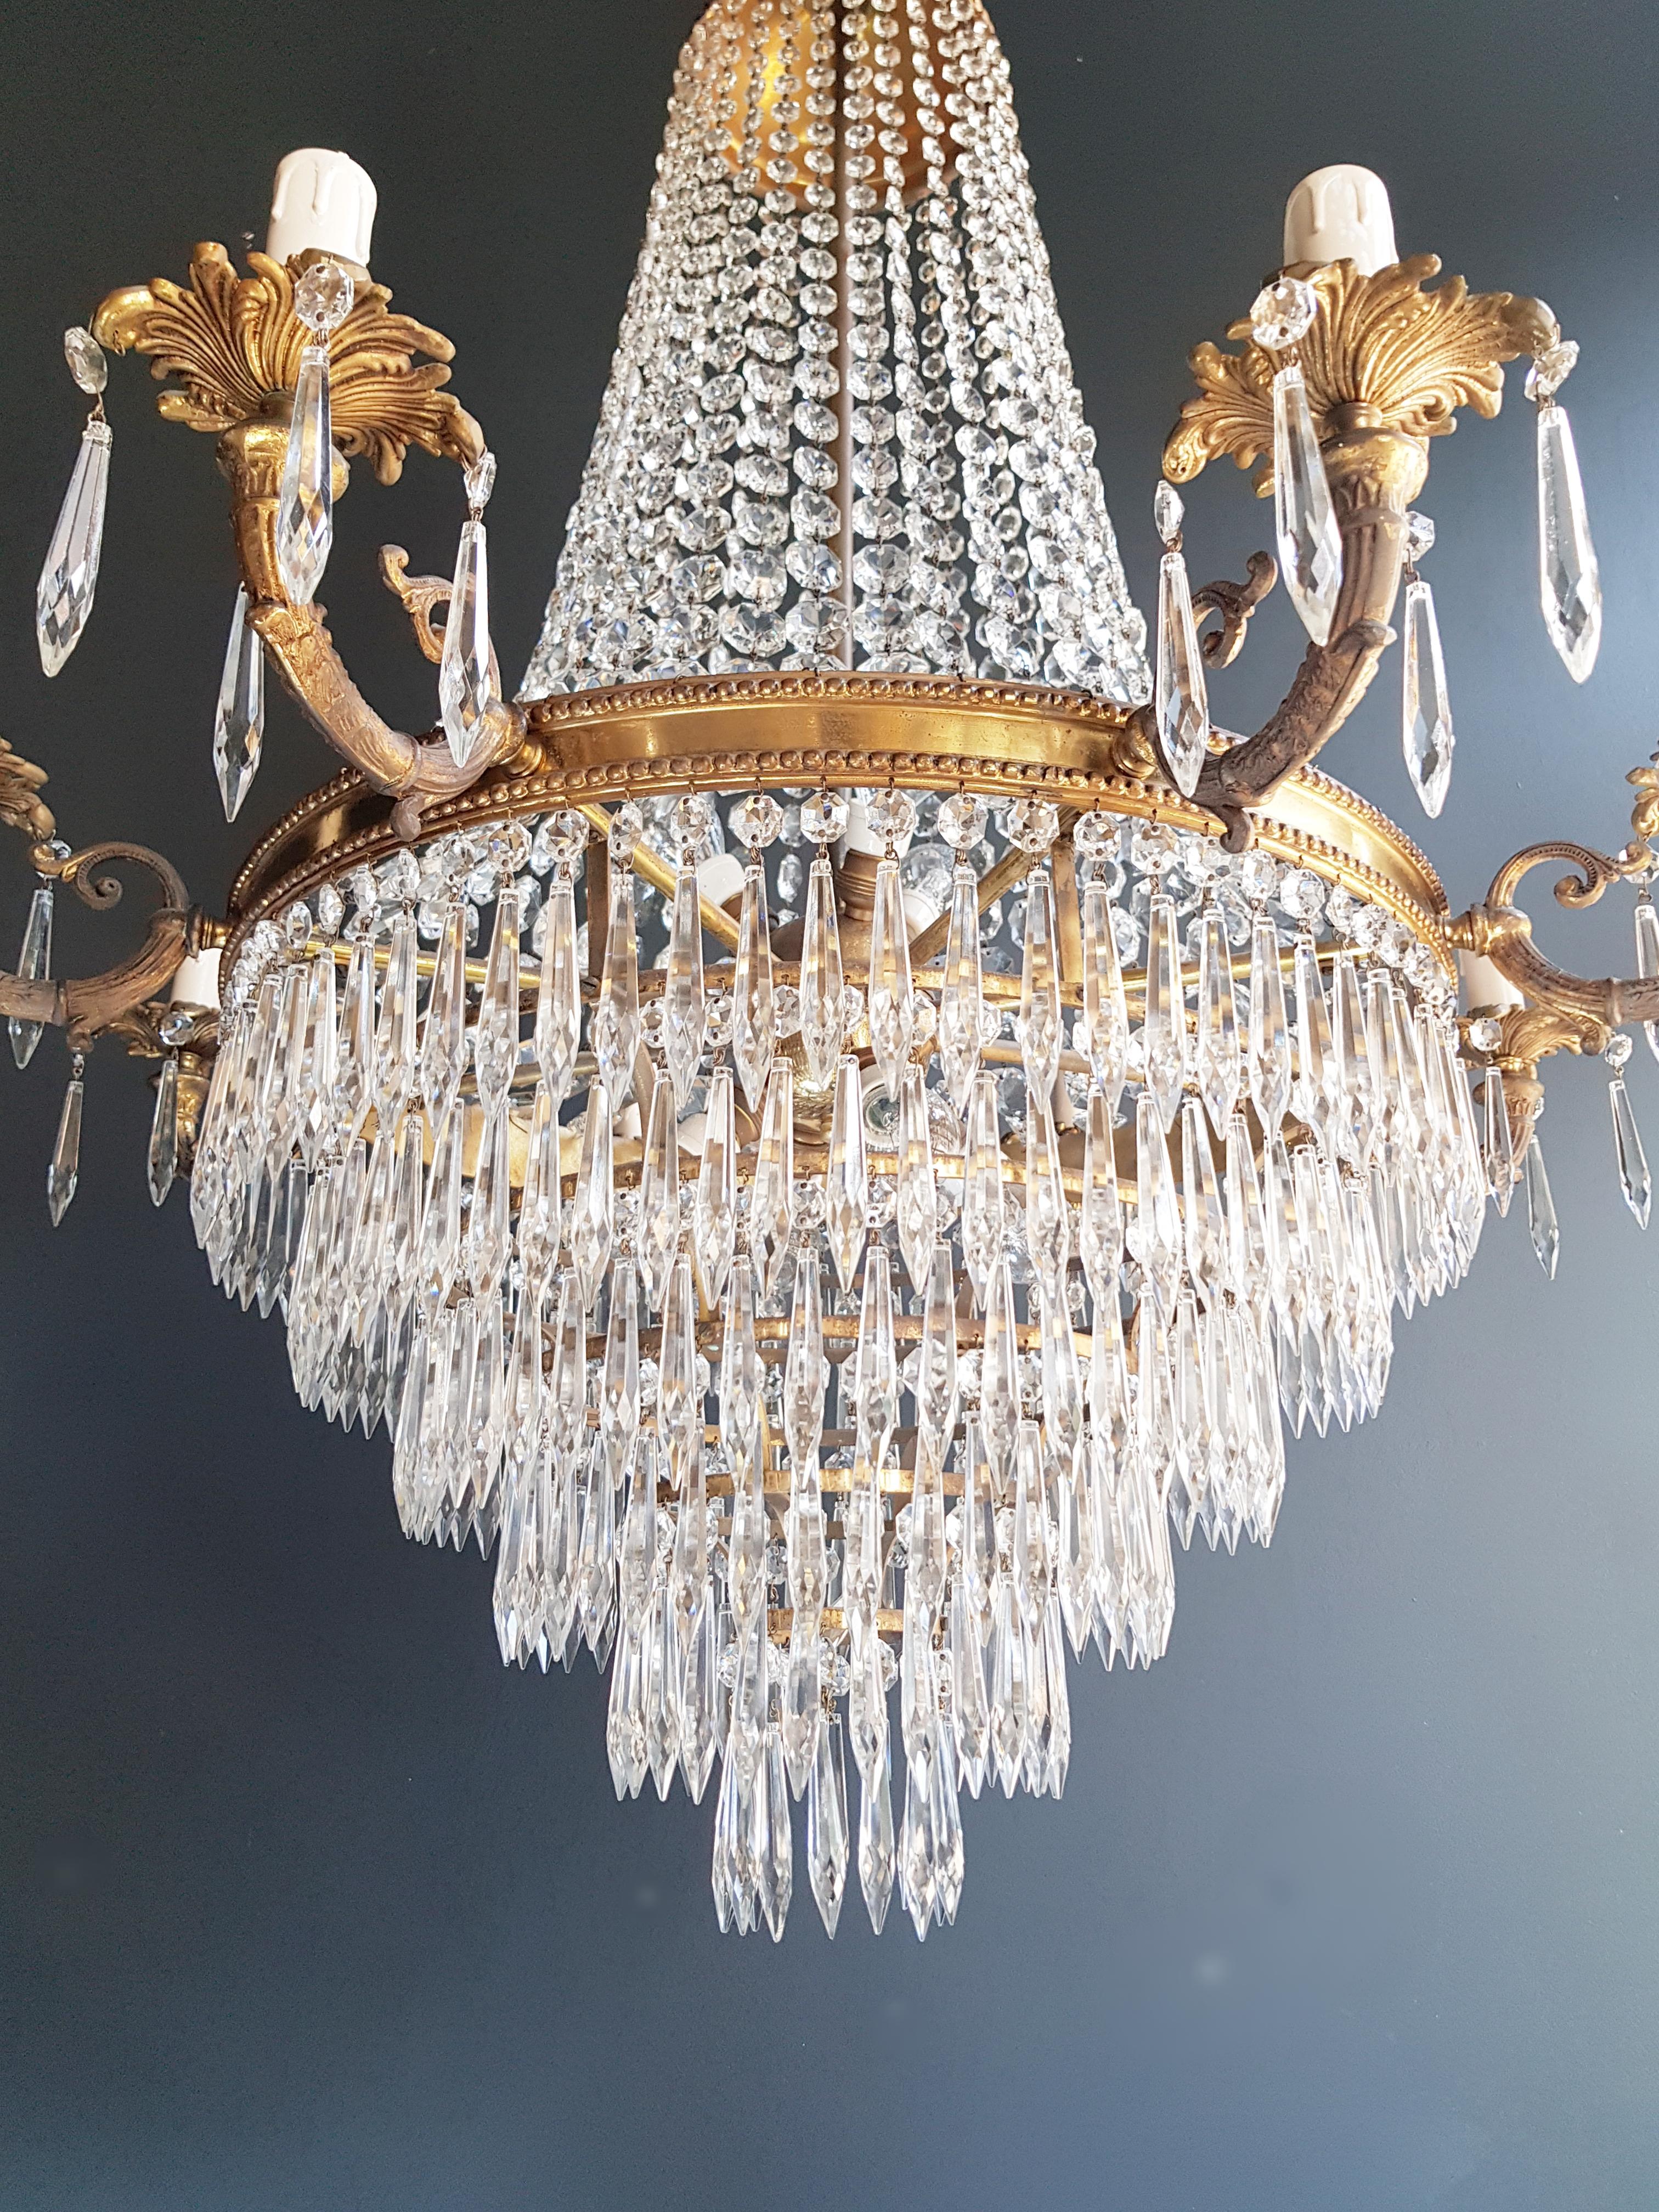 Montgolfiè Empire Sac a Pearl Chandelier Crystal Lustre Ceiling Lamp Antique (Europäisch)